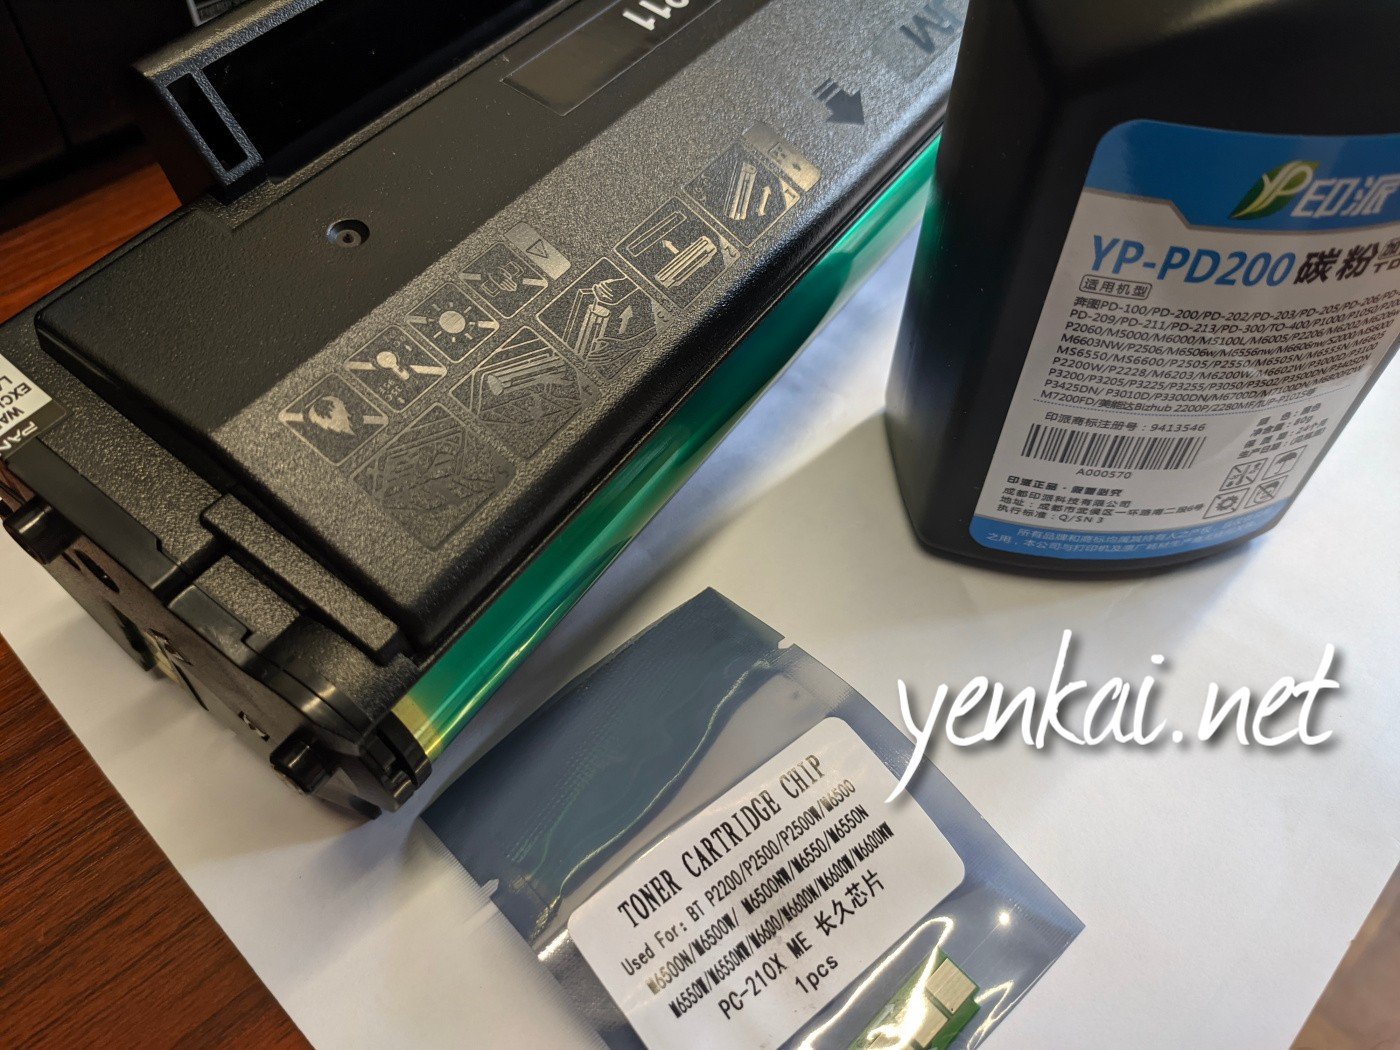 Taobao product recommendation – Printer toner refill